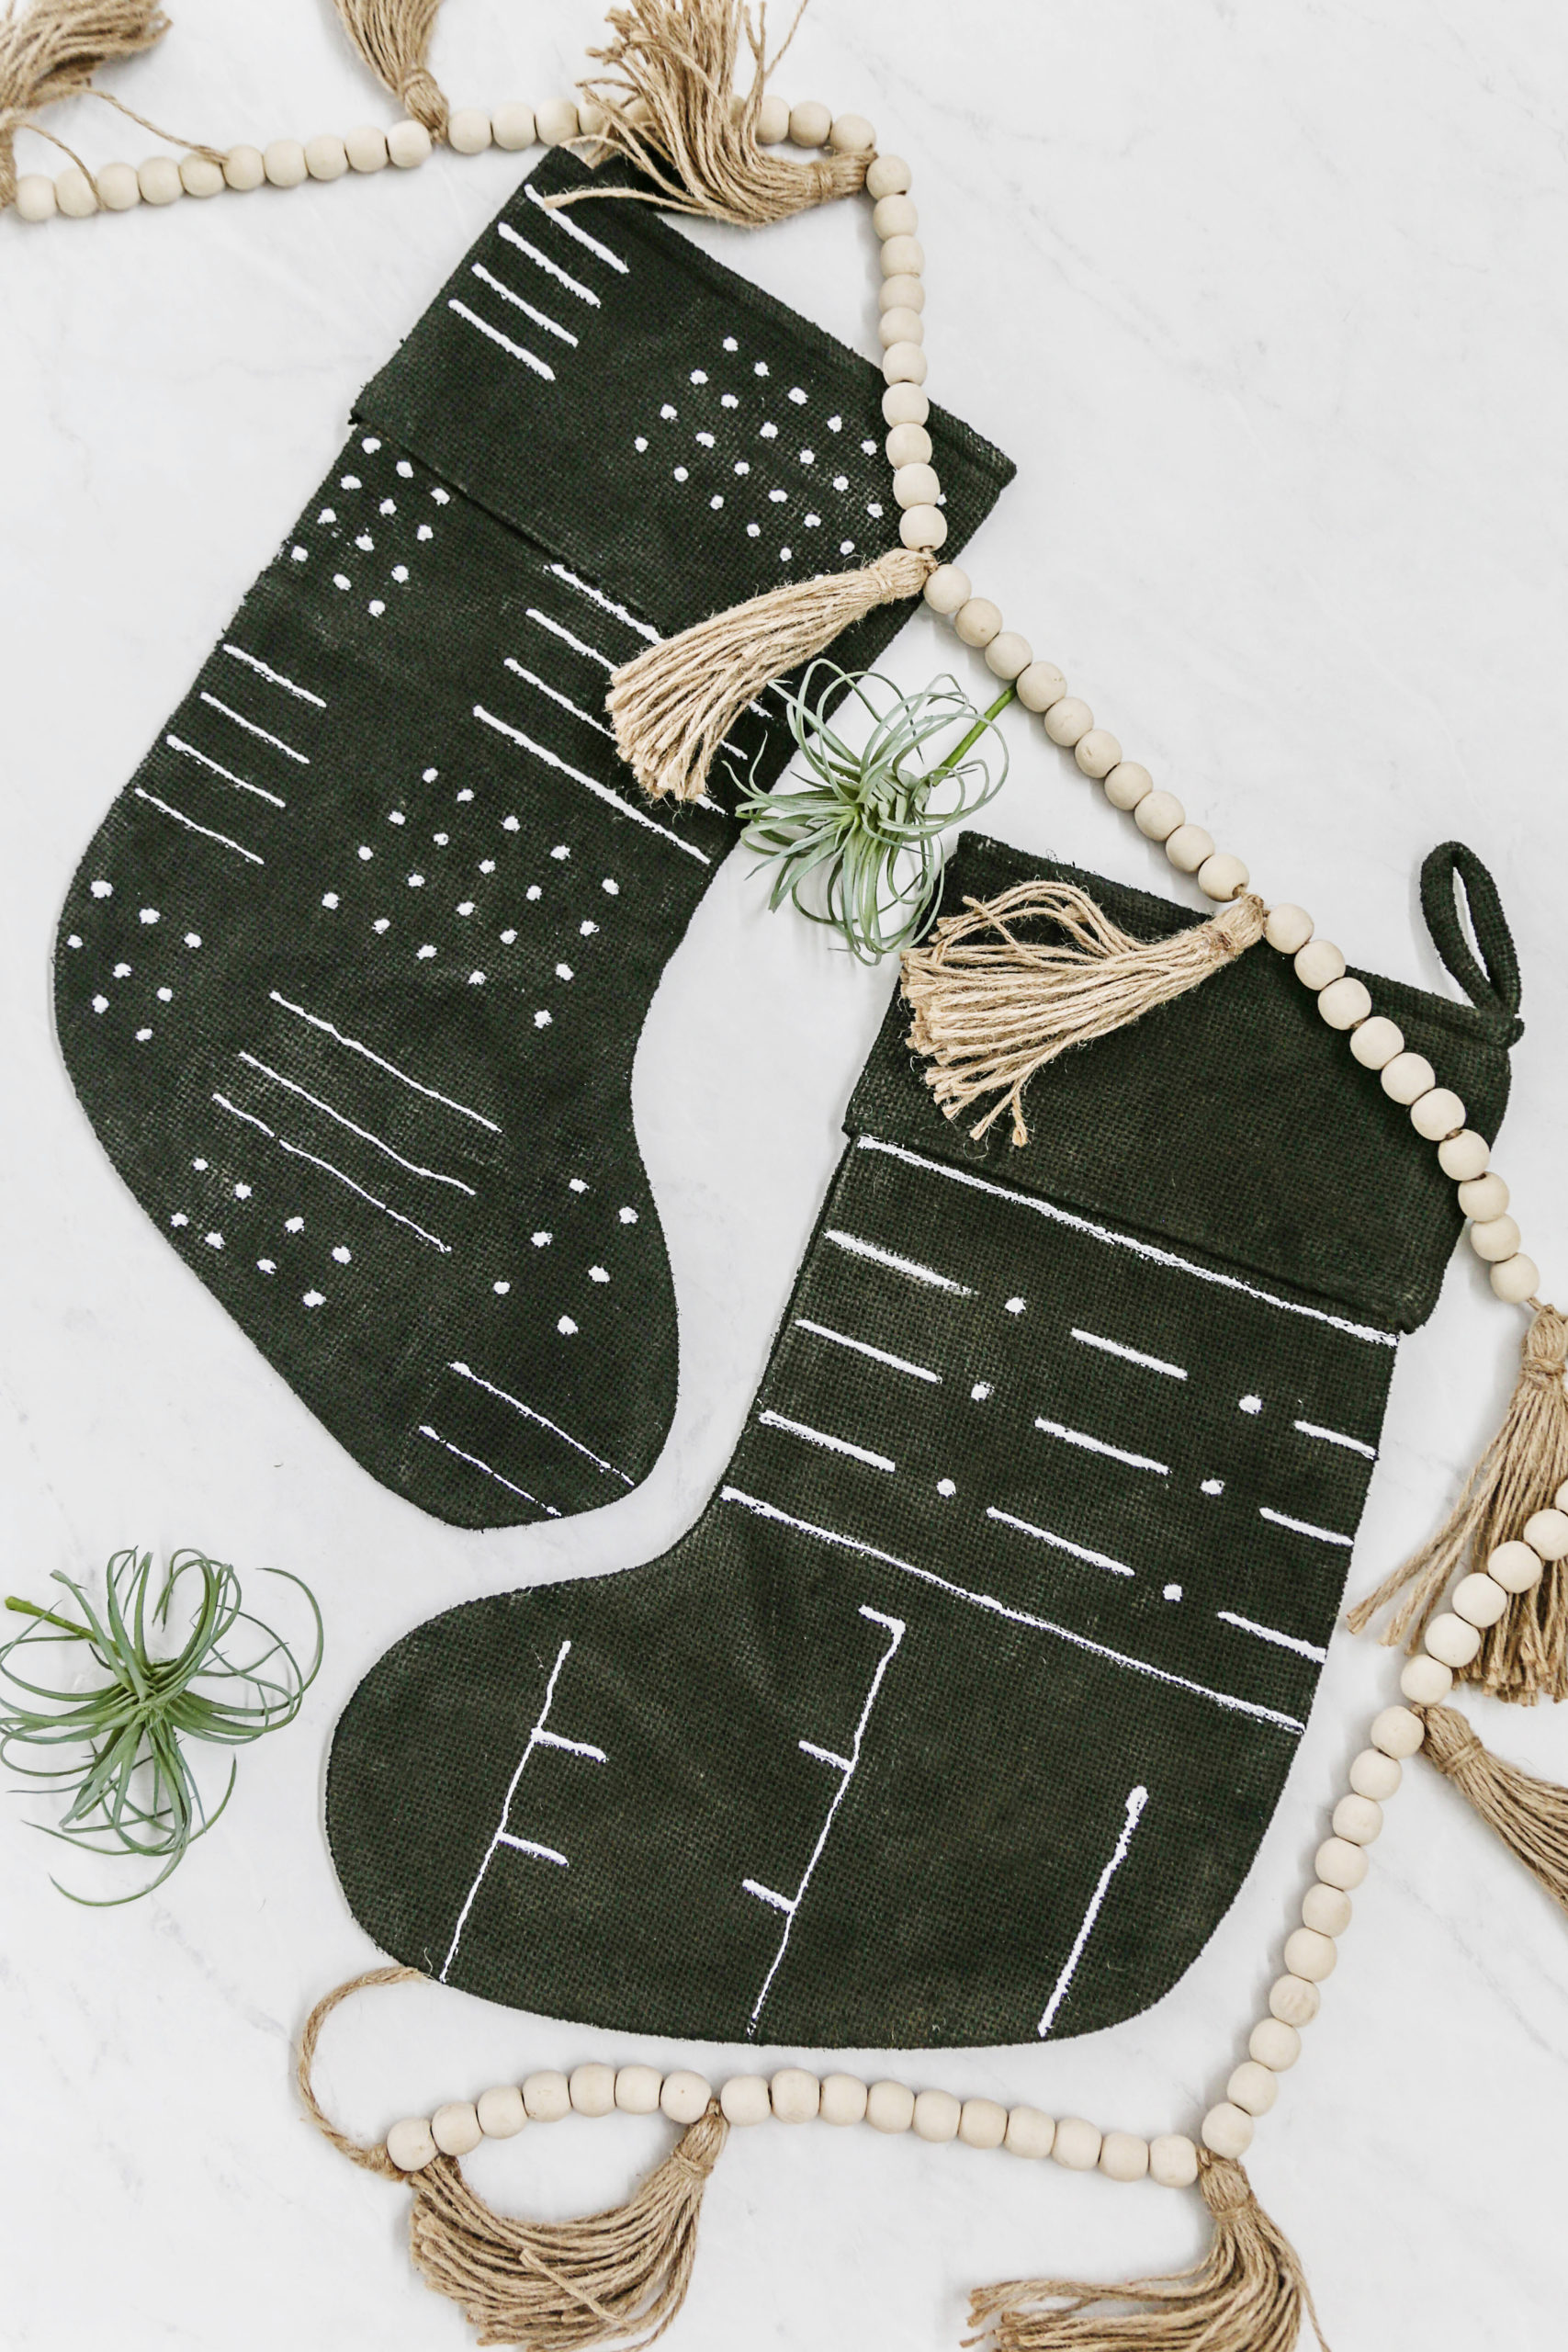 DIY No-Sew Mudcloth Christmas Stockings